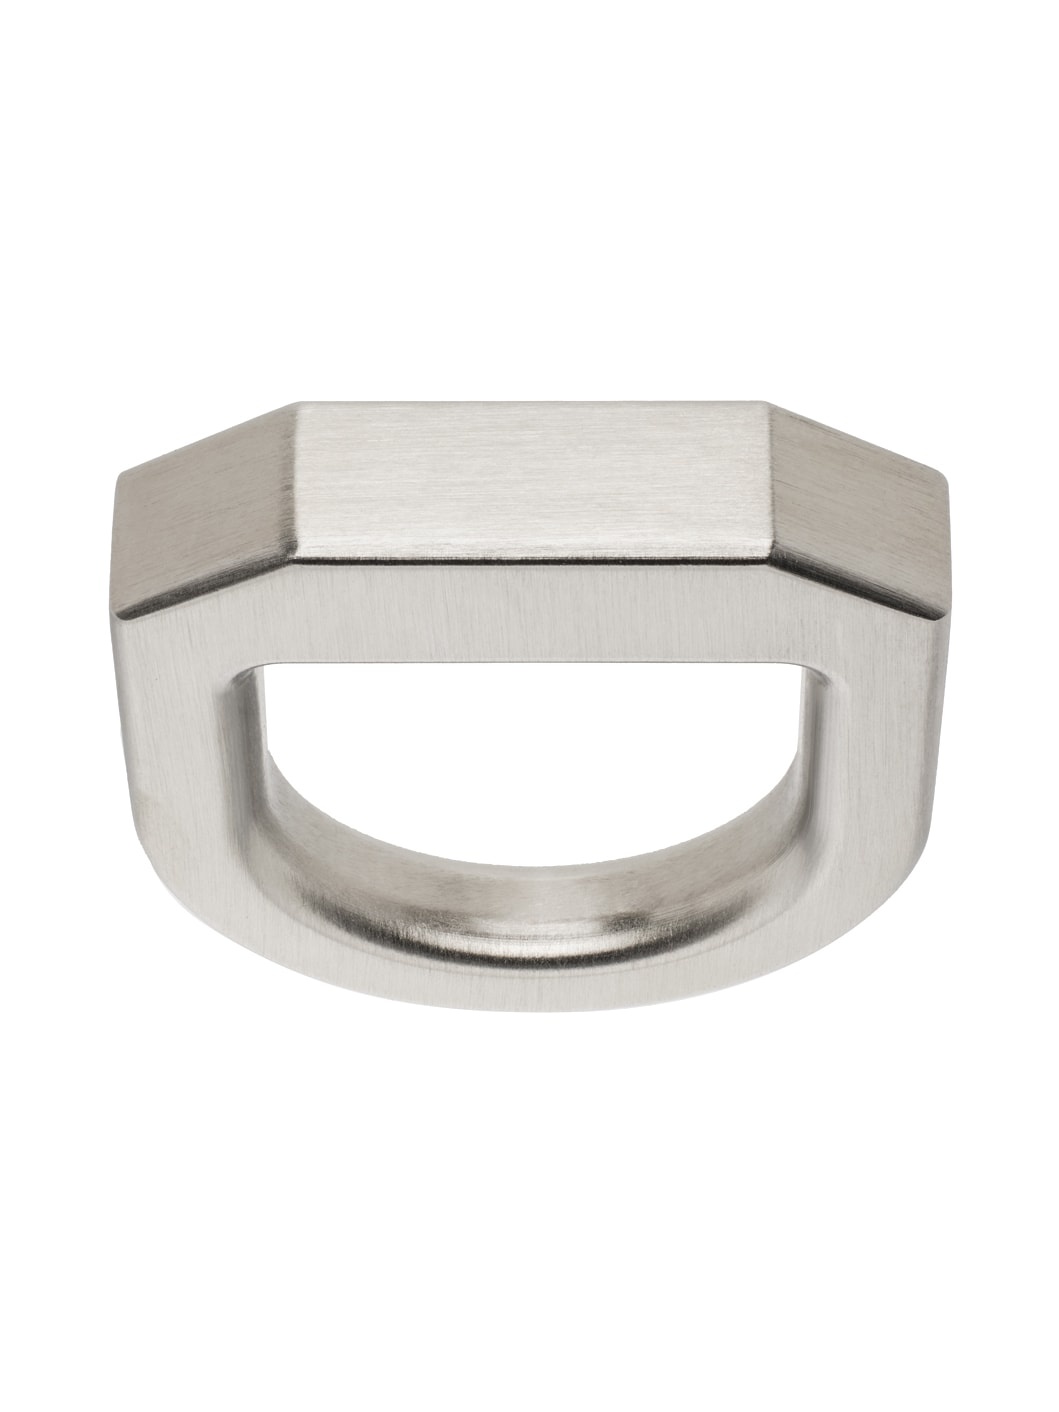 Silver Beveled Ring - 1